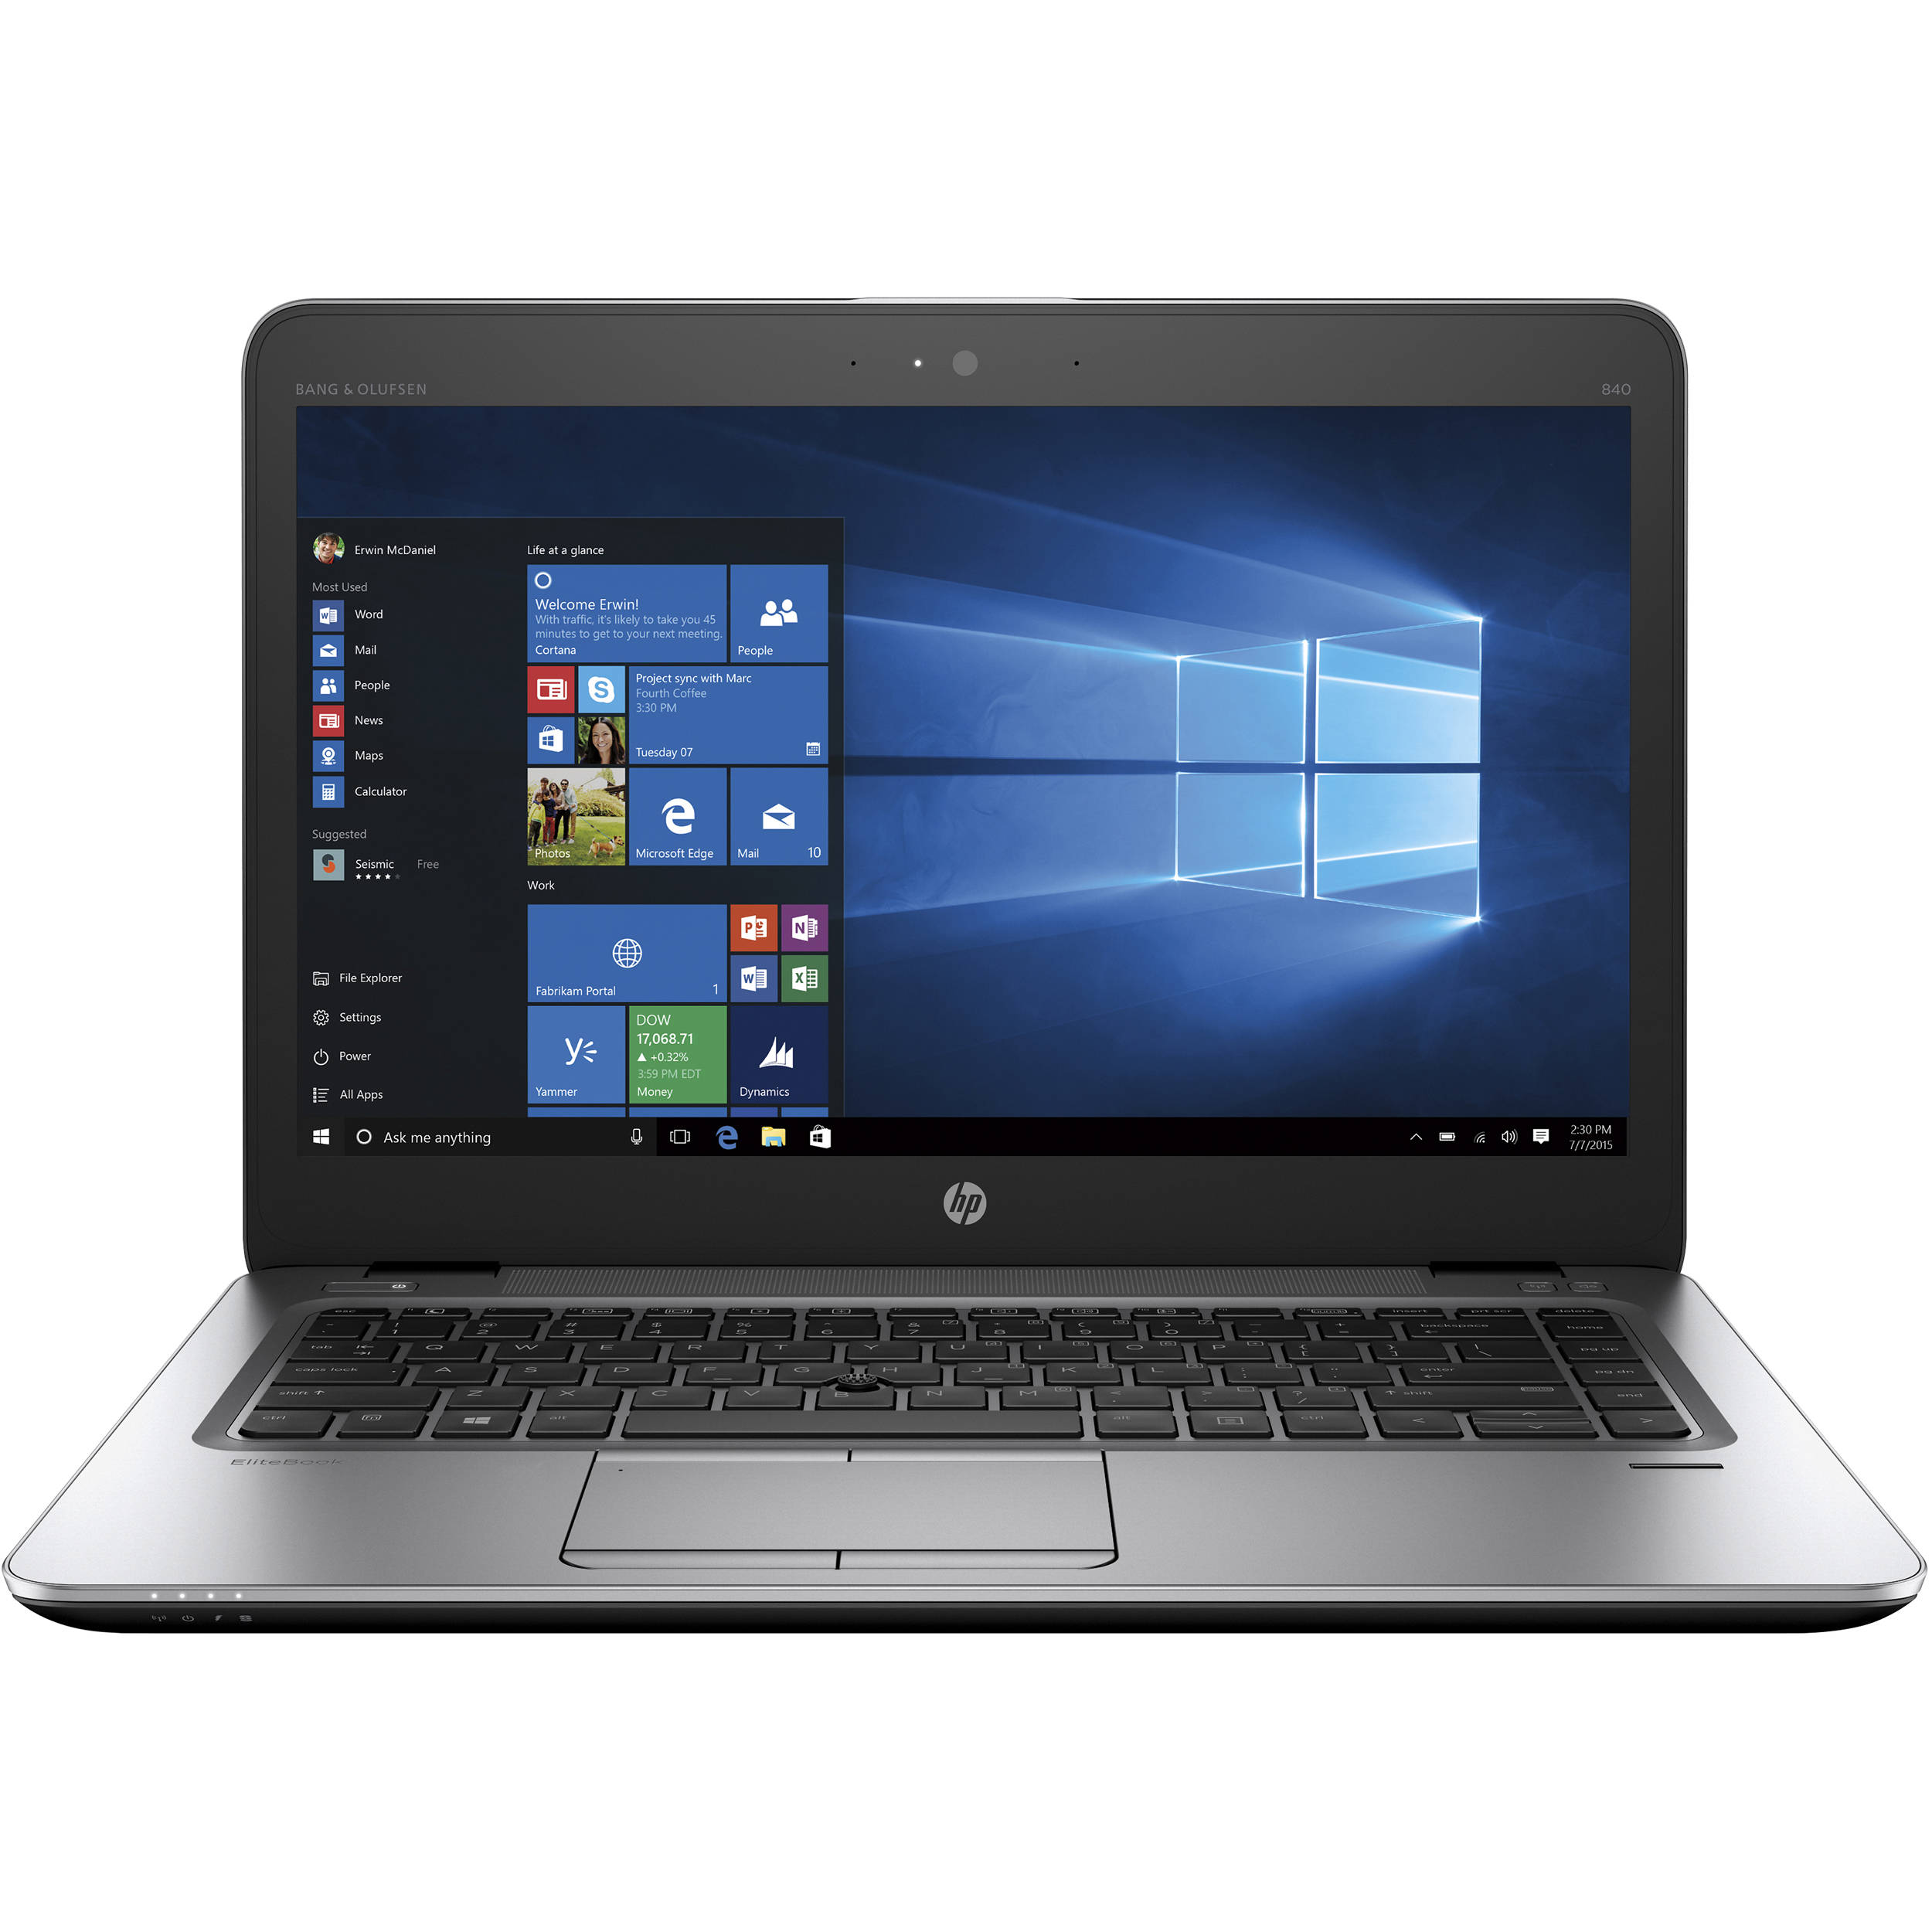 Hp Elitebook 840 G3 Laptop Intel Core i5 2.40 GHz 8GB Ram 256GB SSD Windows 10 Pro - Scratch and Dent (Refurbished) - image 1 of 6